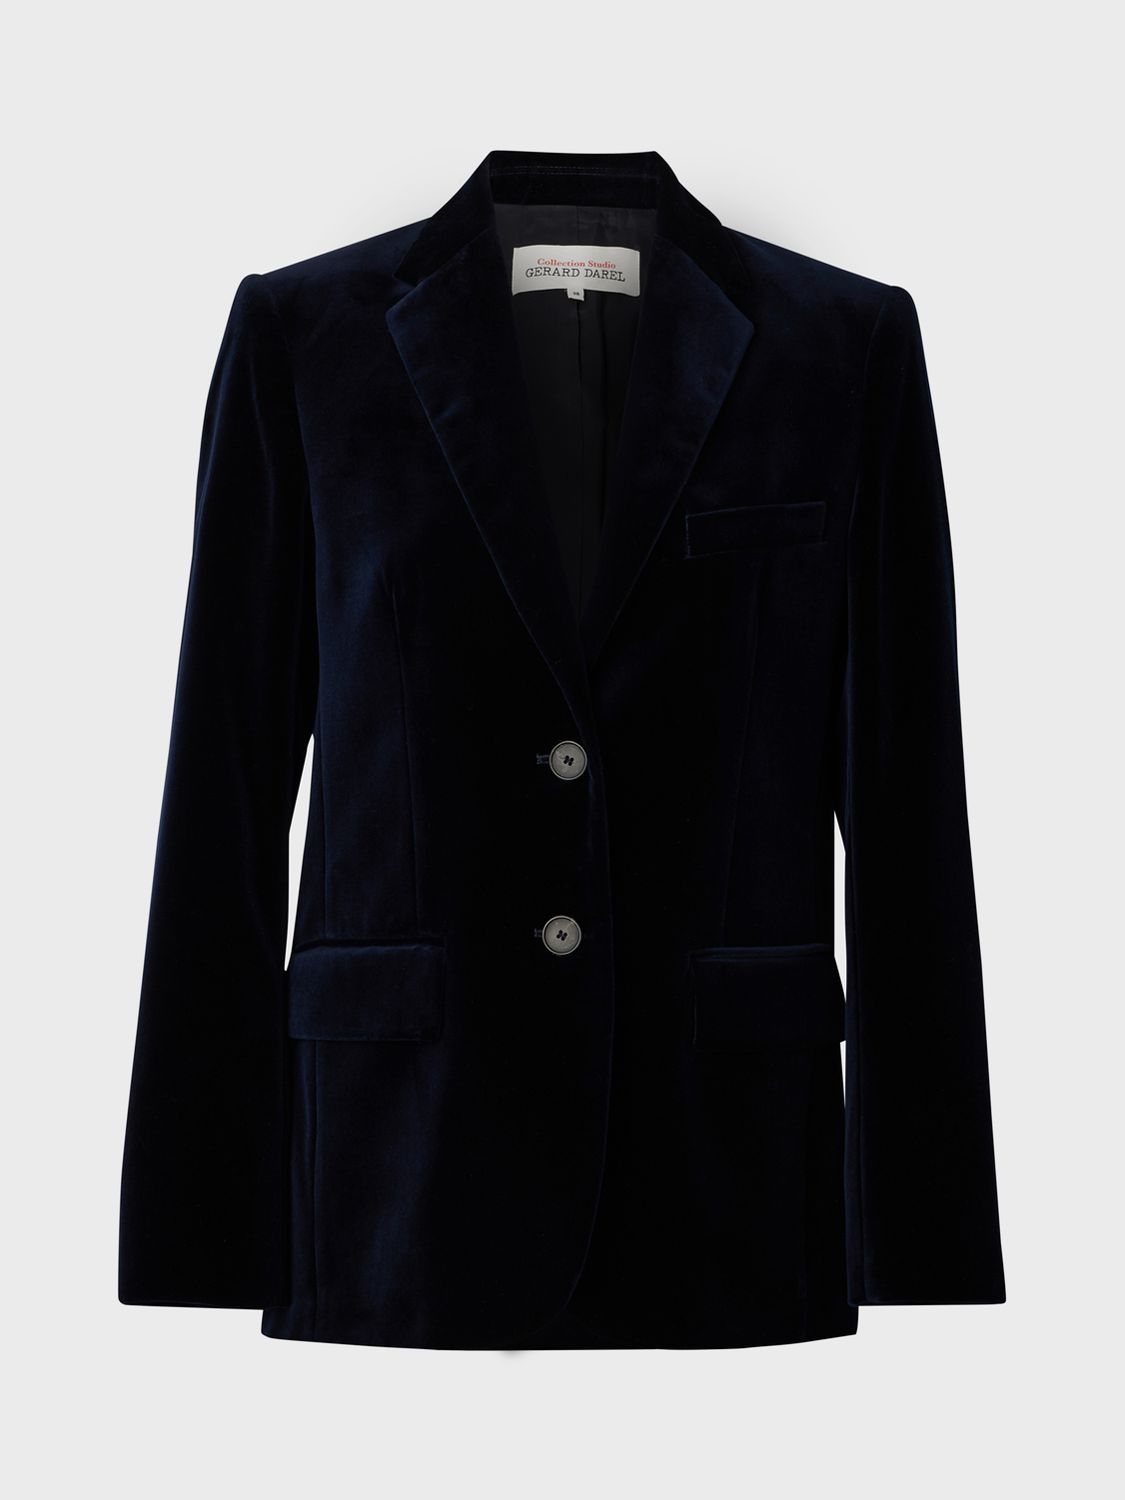 Gerard Darel Noriane Velvet Jacket, Navy at John Lewis & Partners